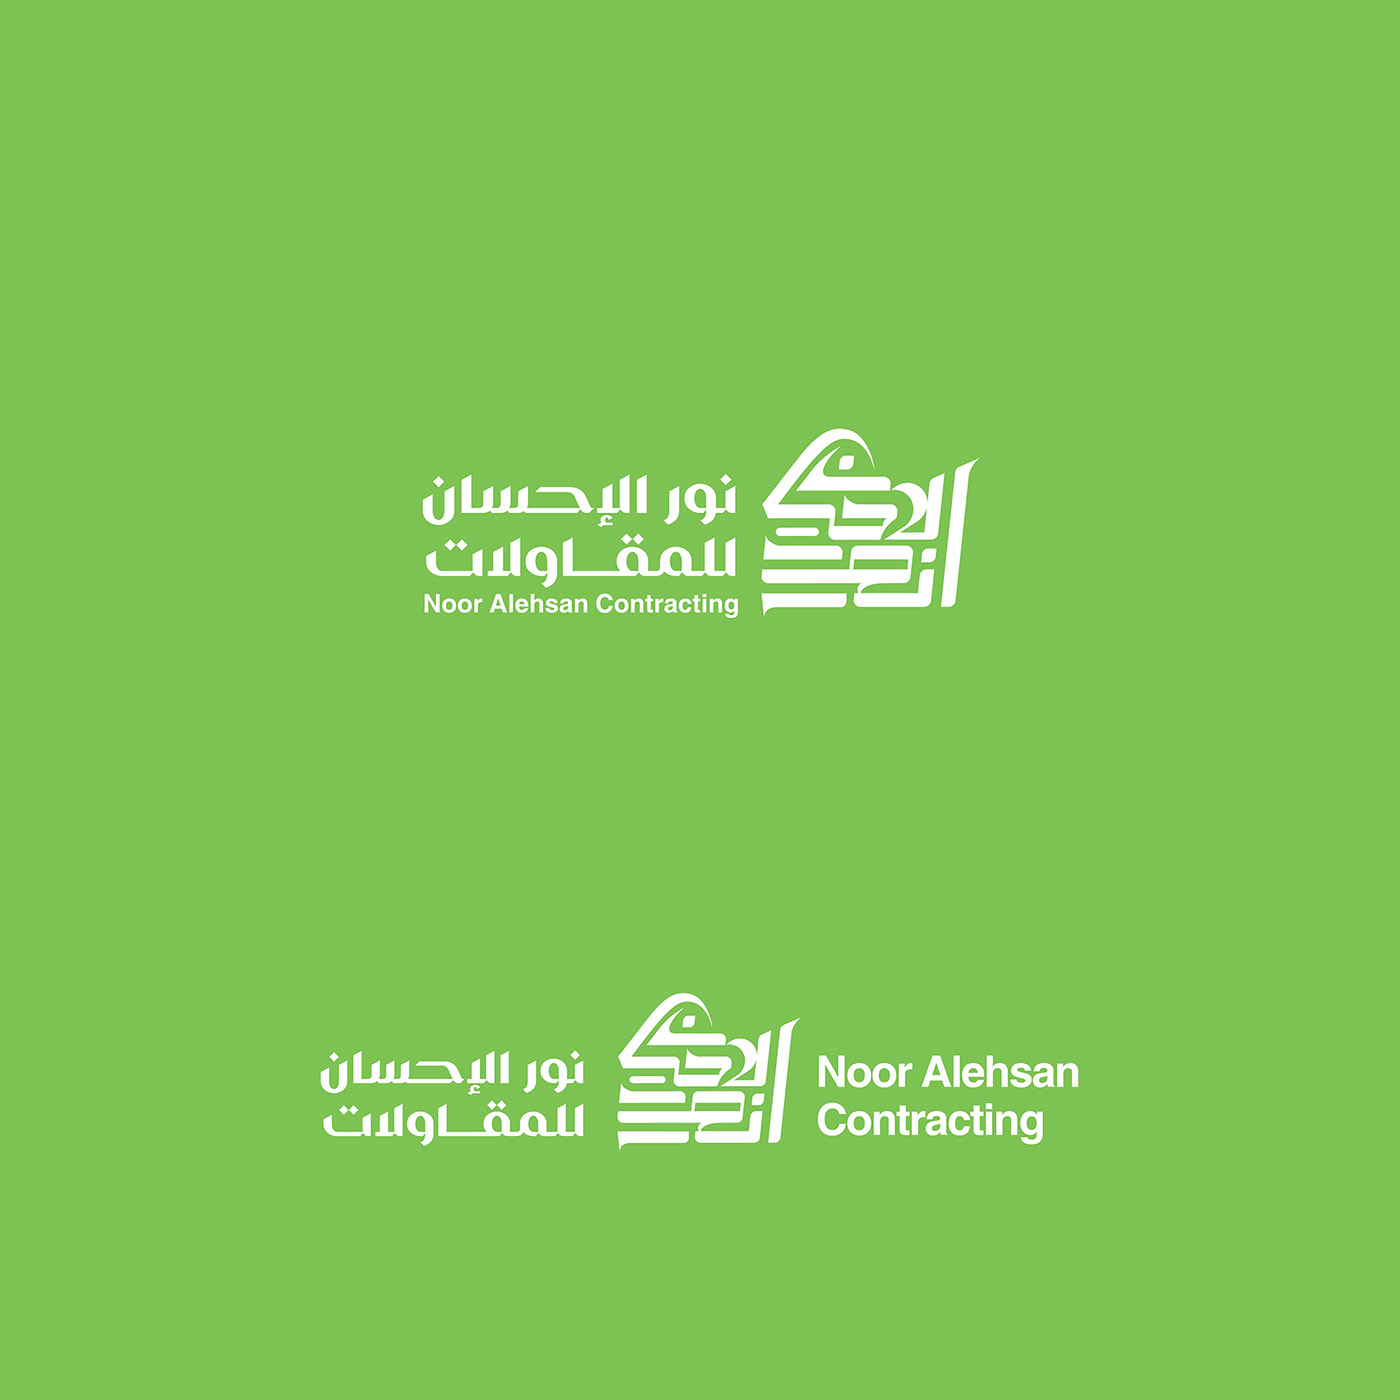 هوية logo Logo Design inspirational creative logo calligraphy logo arabic logo design calligraphic logo constructing logo noor alehsan